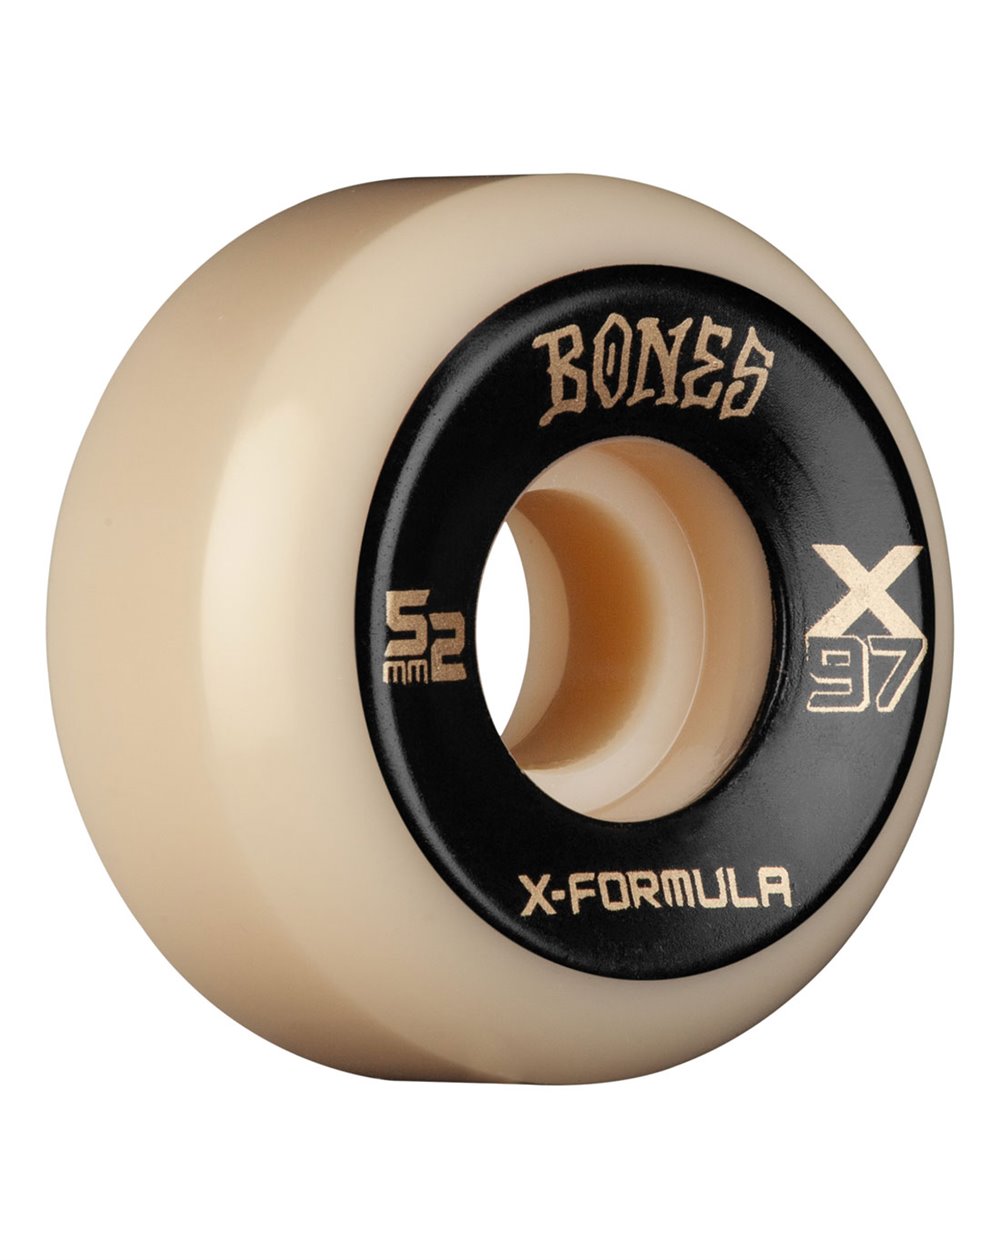 Bones Wheels Ruote Skateboard X-Formula V5 Sidecut X-Ninety-Seven 52mm 97A 4 pz